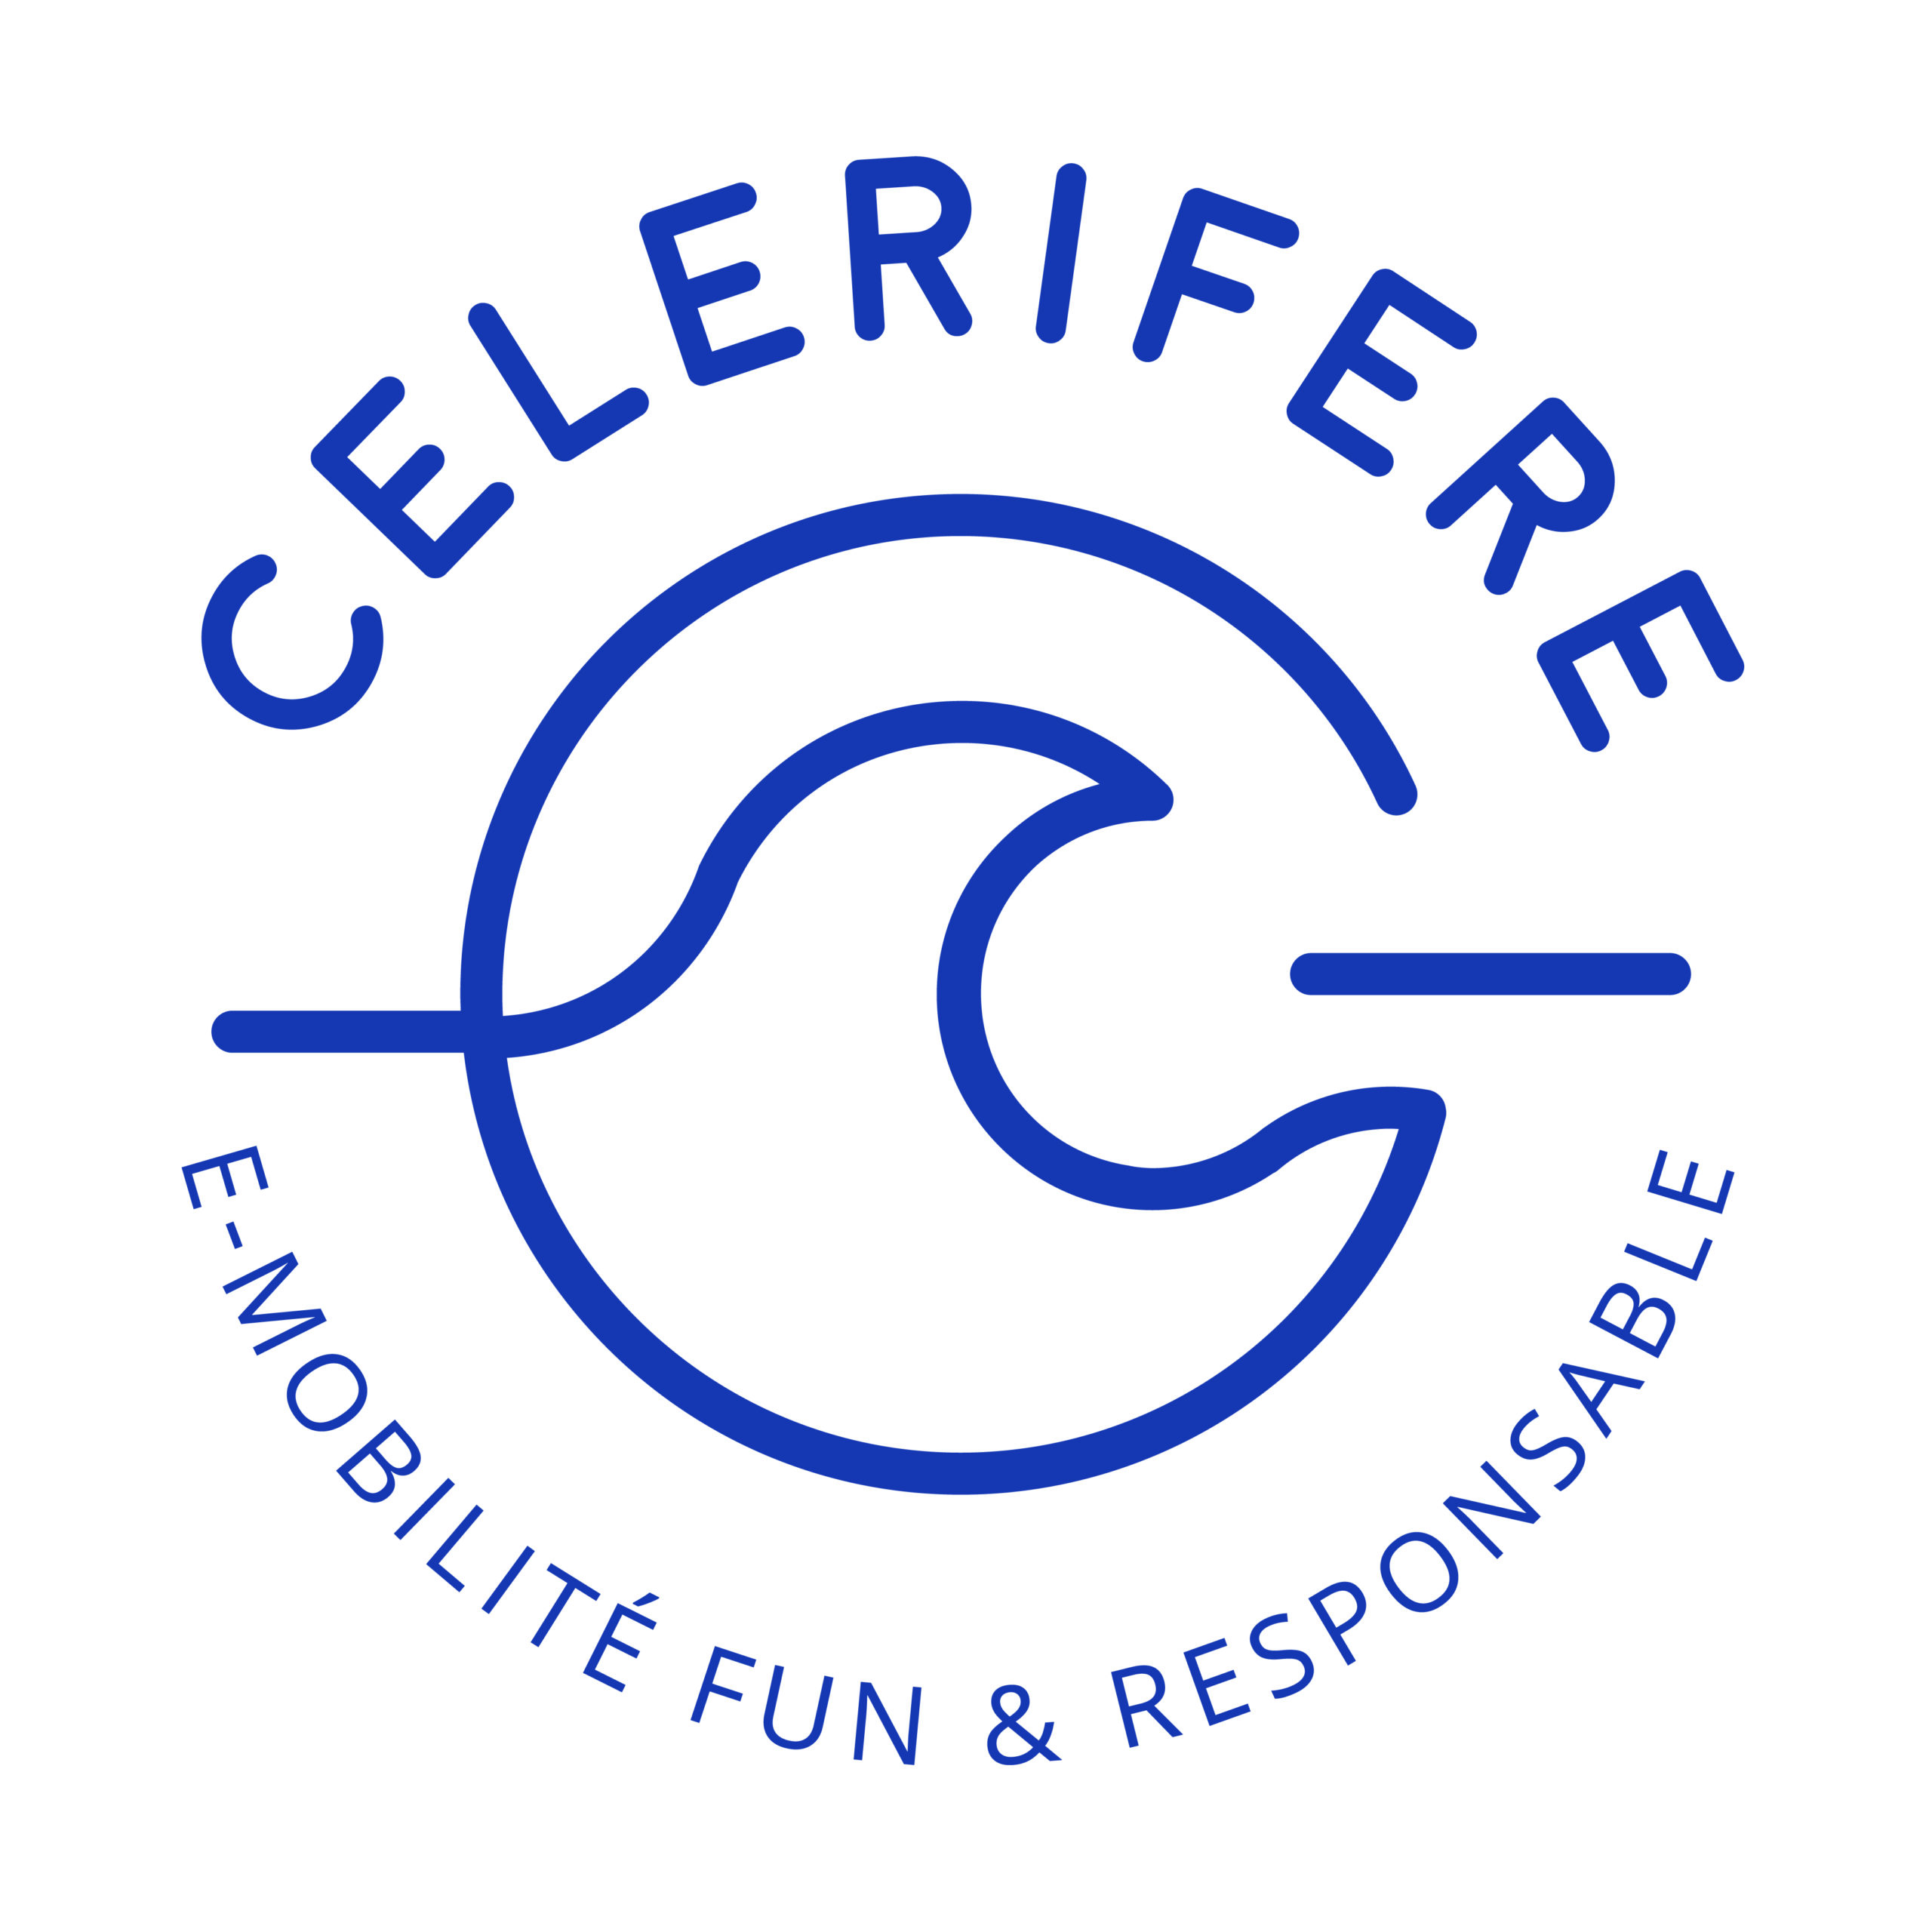 CELERIFERE_logo_CMJN-5.jpg